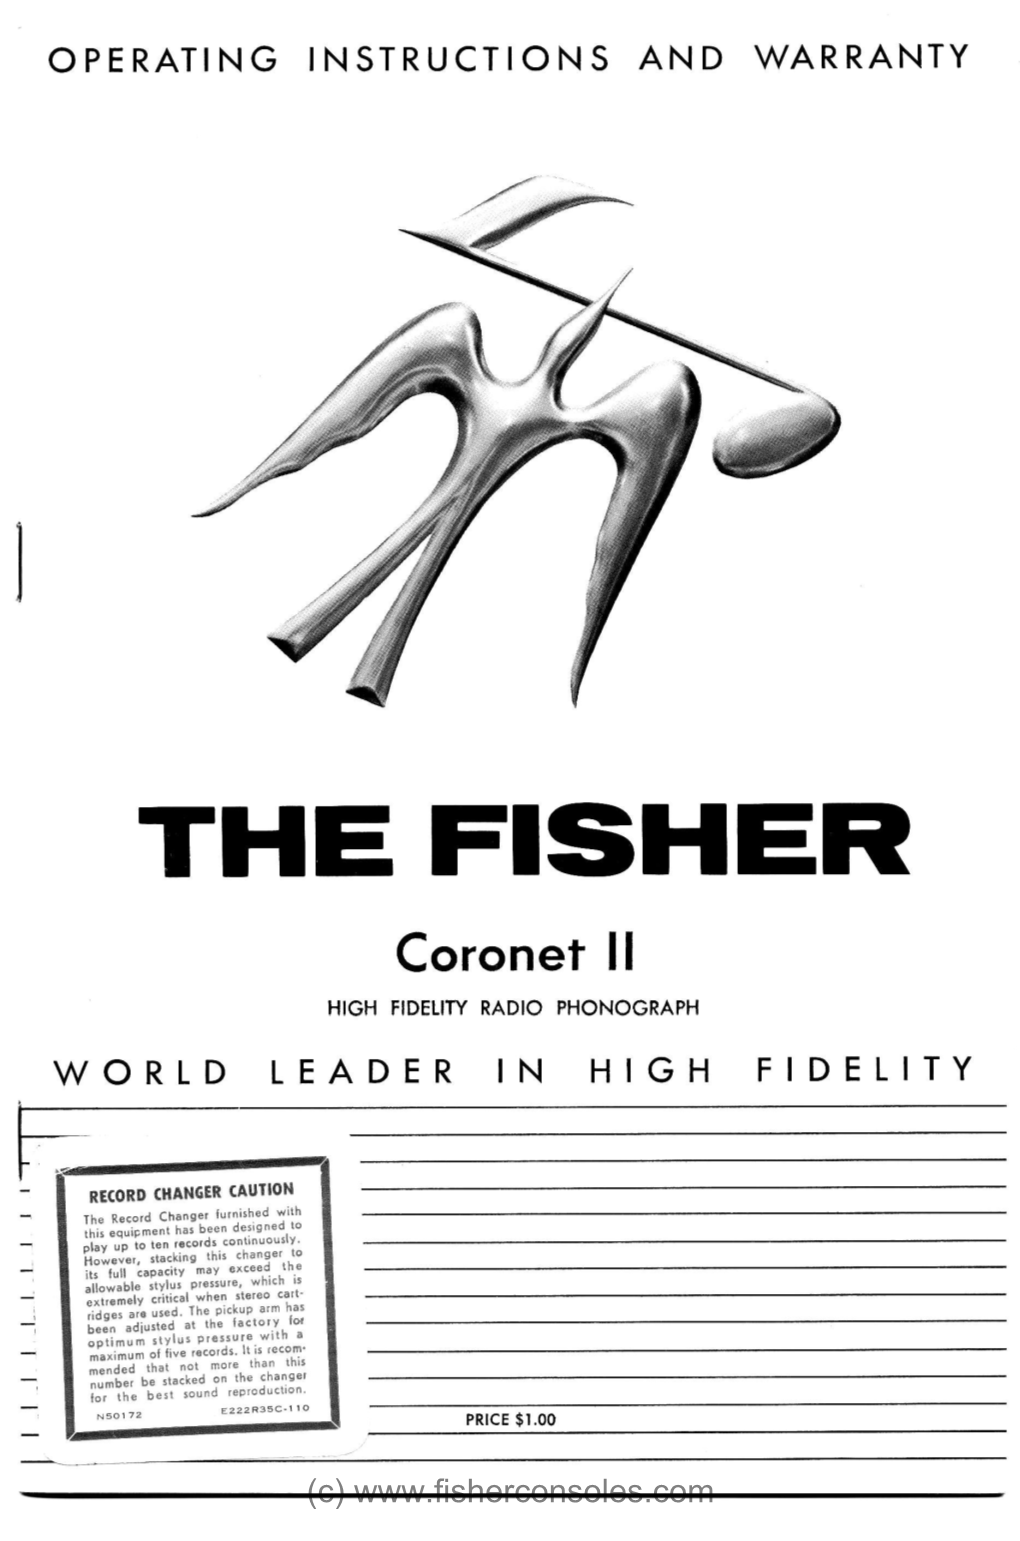 THE FISHER Coronefll HIGH FIDELITYRADIO PHONOGRAPH